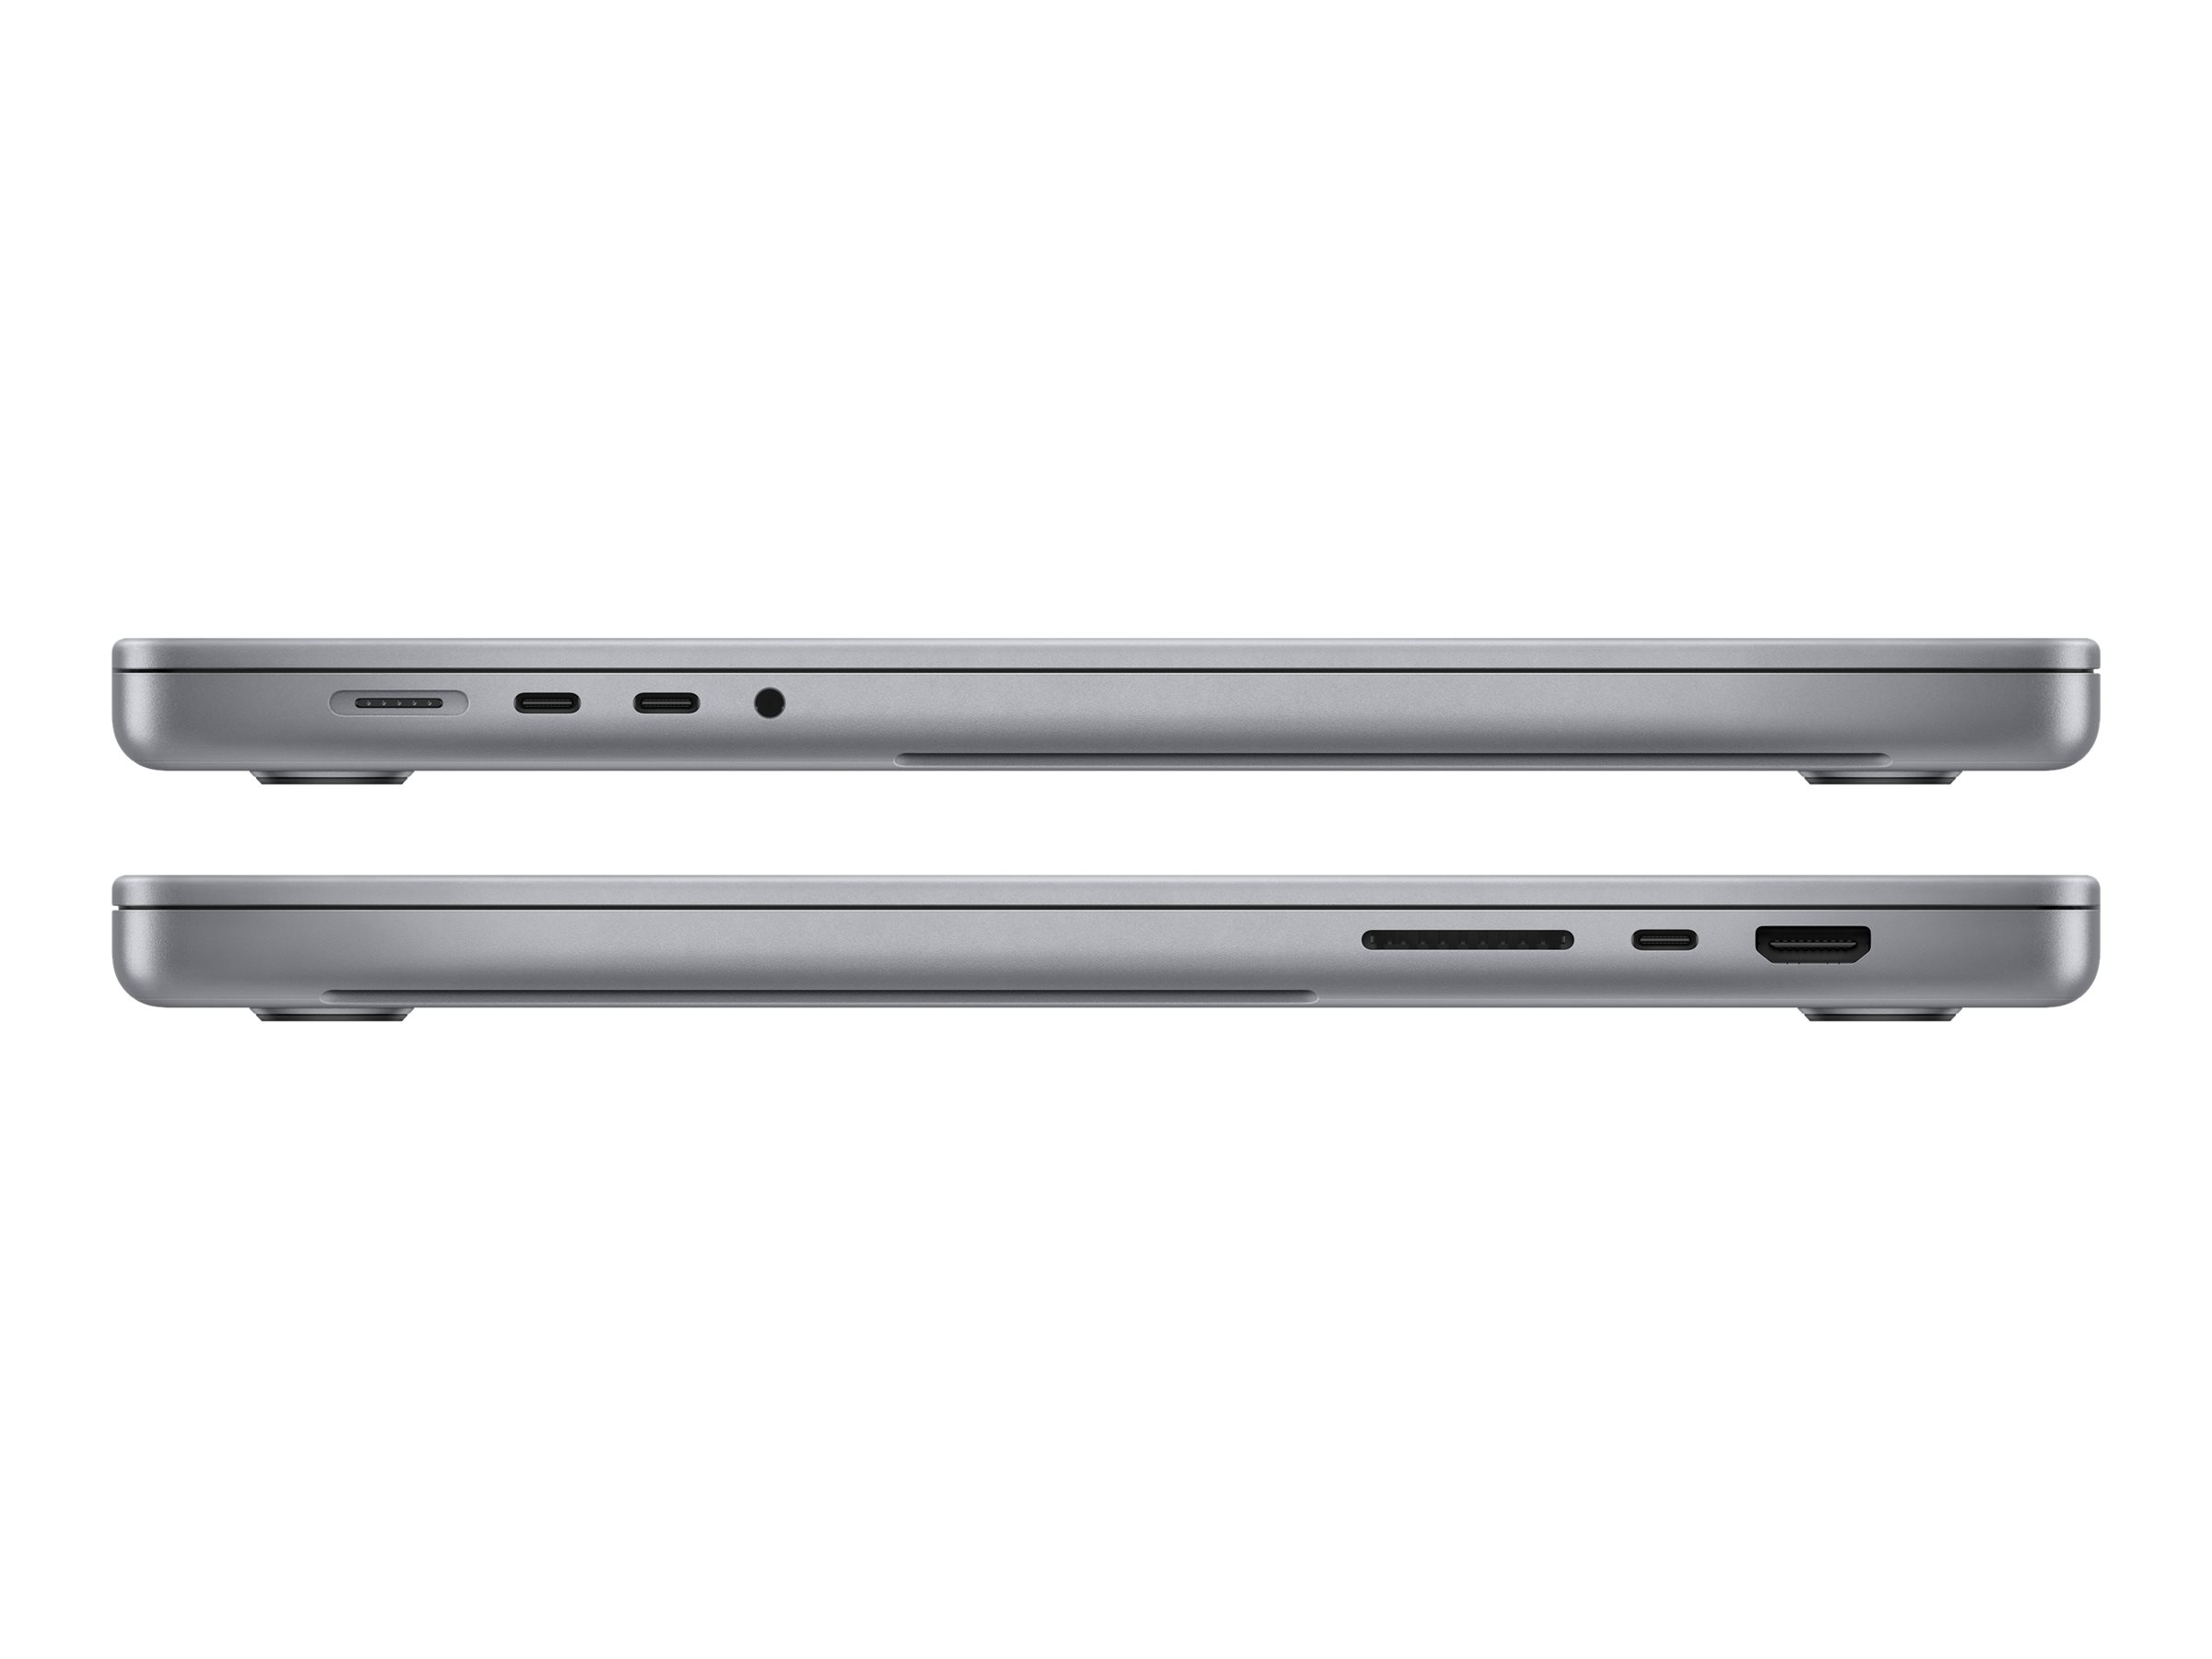 Apple MacBook Pro - M1 Max | www.shi.com